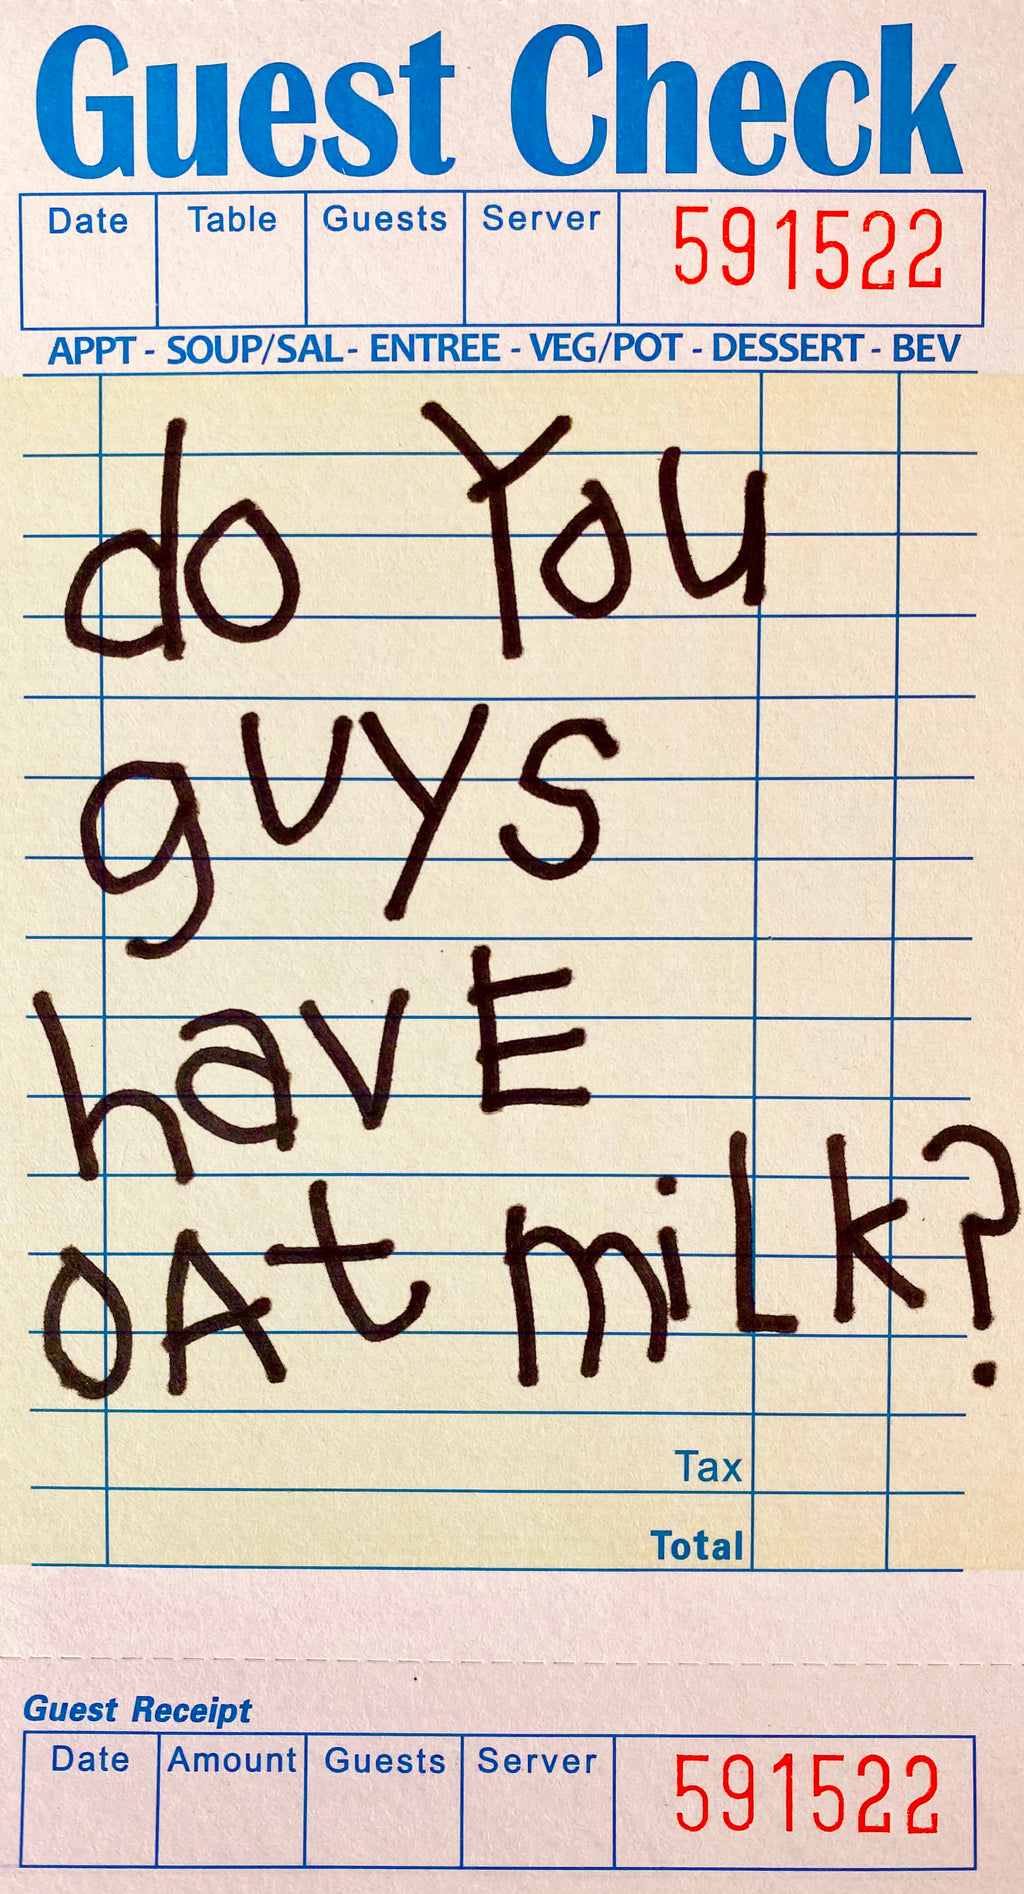 The Other Oat Milk Print - 12x18in Giclee Fine Art Print